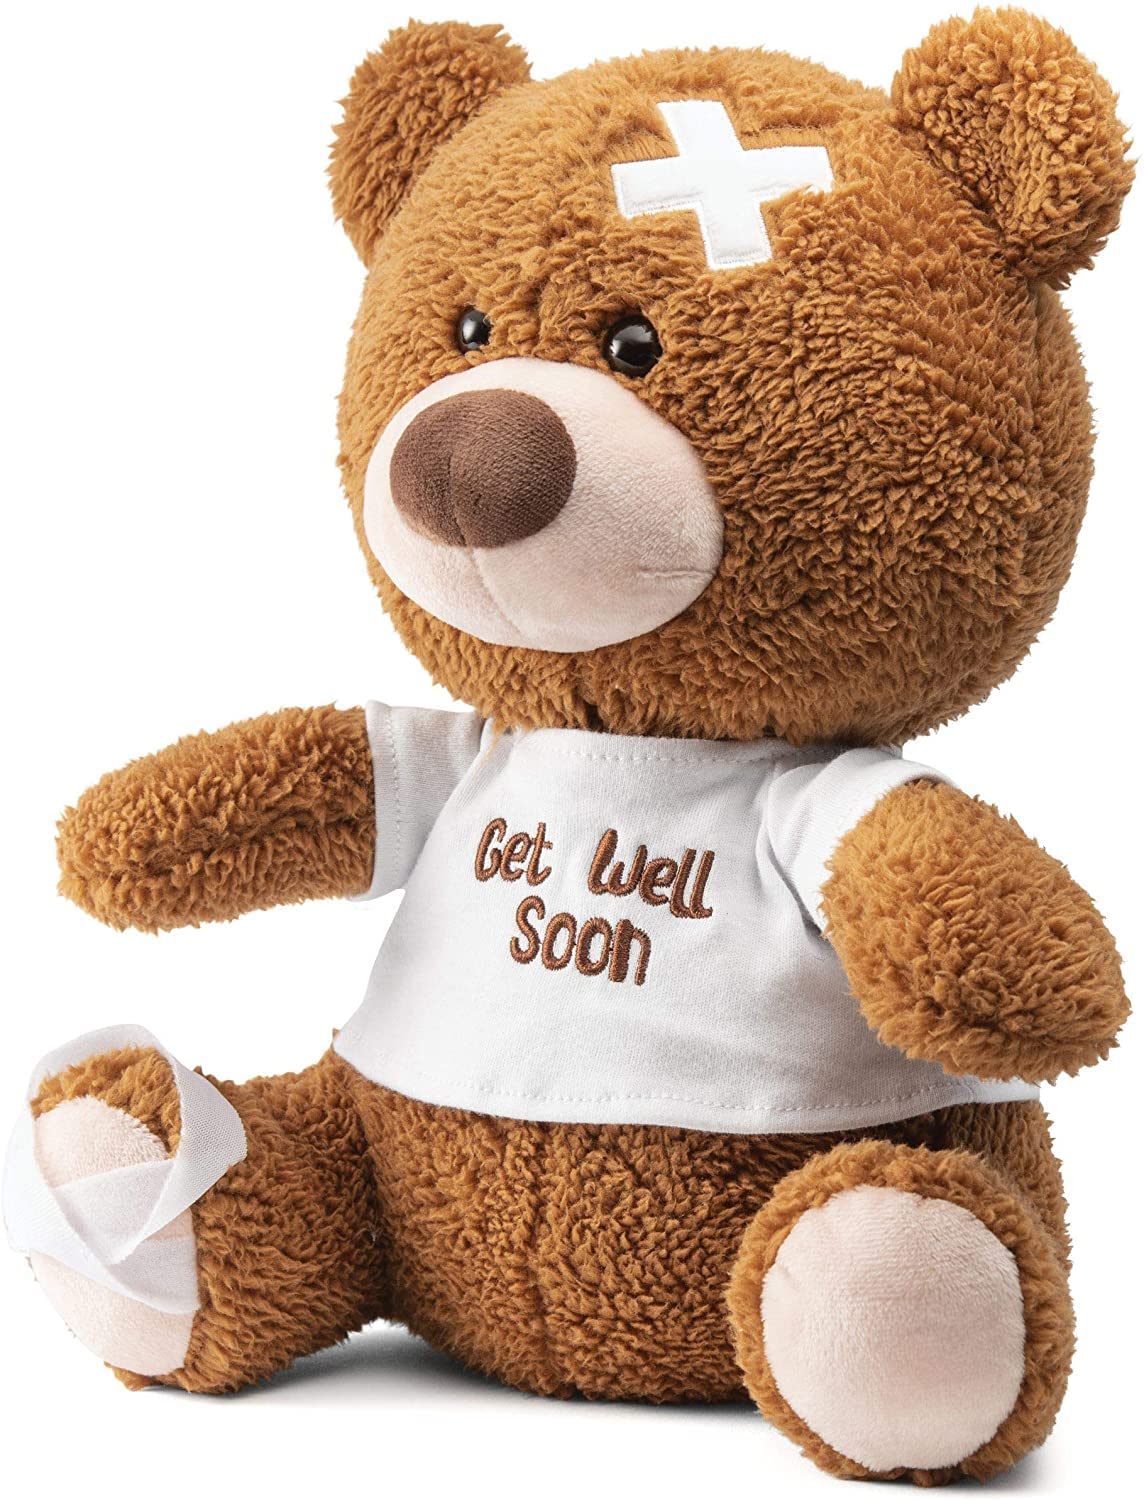 PREXTEX 12-Inch Get Well Soon Plush Bear - Soft Stuffed Teddy Bear - Get Well Soon Gifts for Kids Stuffed Animals - Get Well Soon Stuffed Toy - Get Well Soon Teddy Bear Plush - Get Well Gift